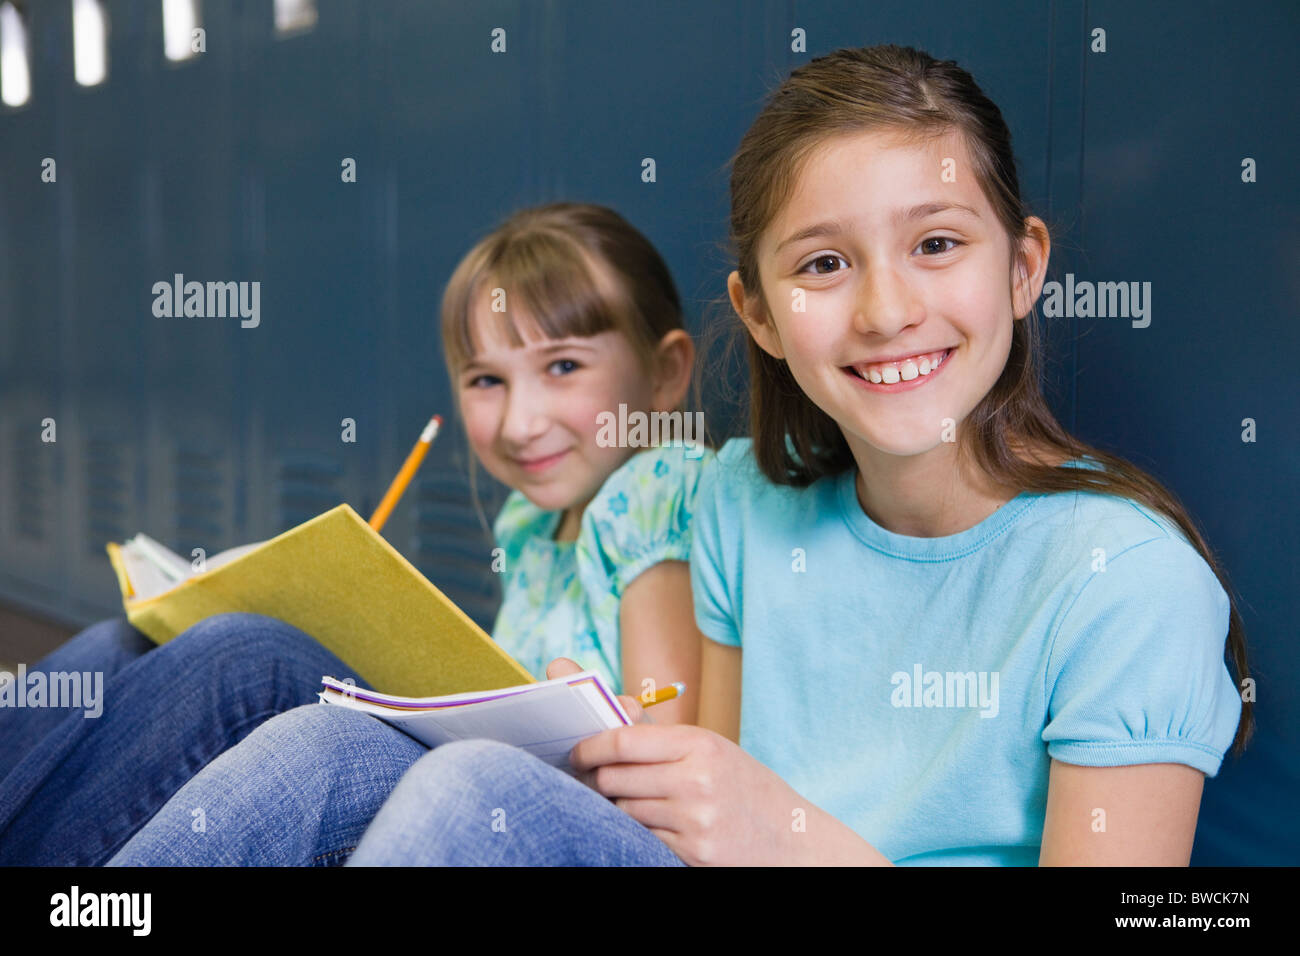 USA, Illinois, Metamora, Portrait of two girls (8-9) sitting at lockers in school corridor and doing homework Stock Photo